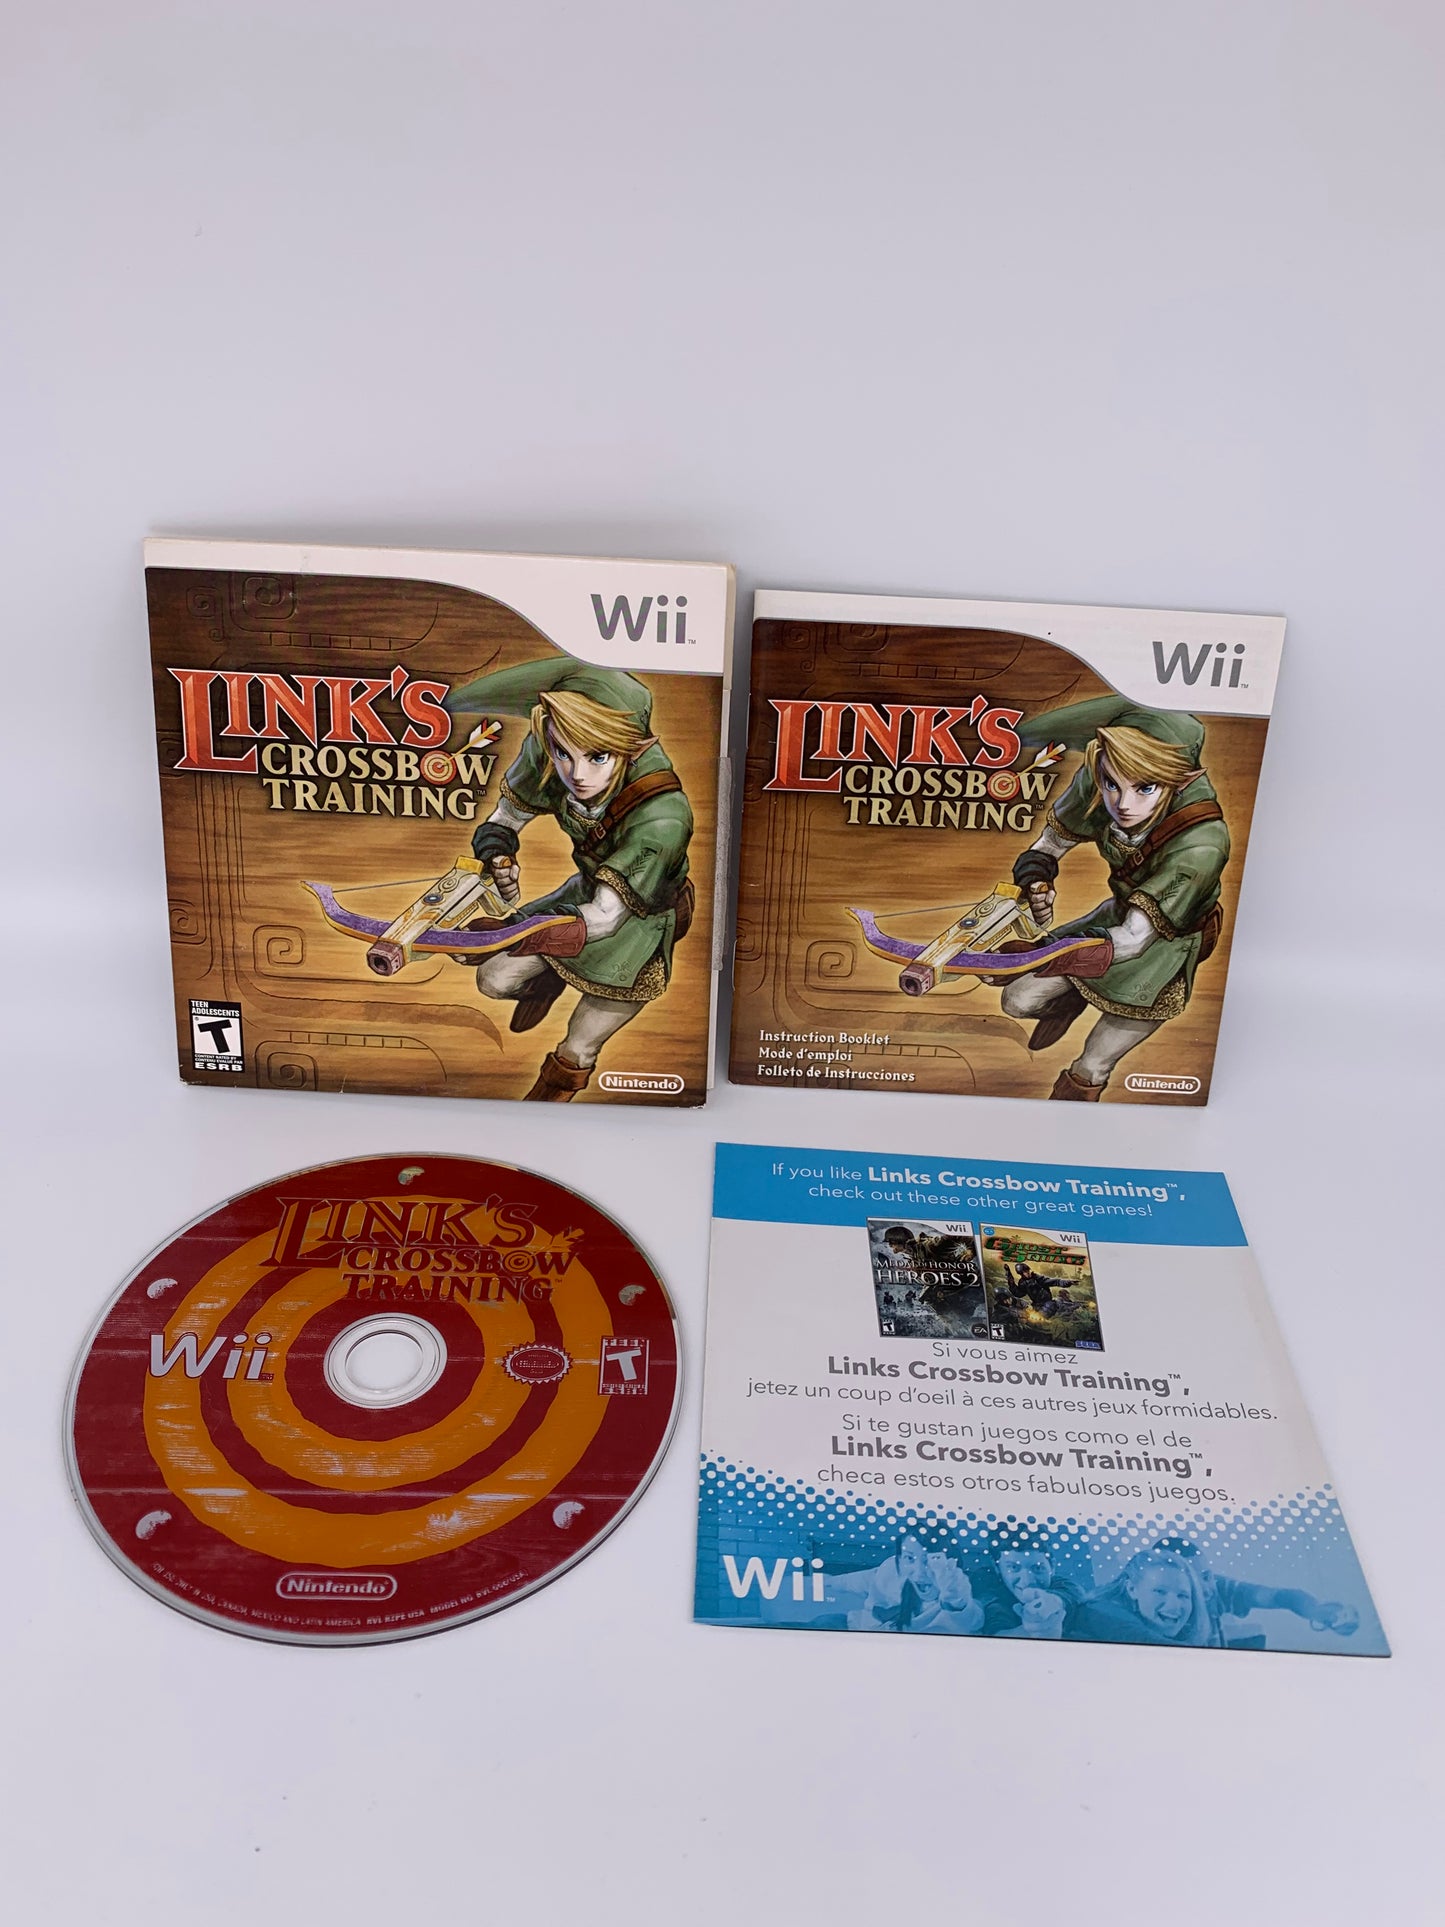 PiXEL-RETRO.COM : nintendo wii link's crossbow training complete box manual game ntsc